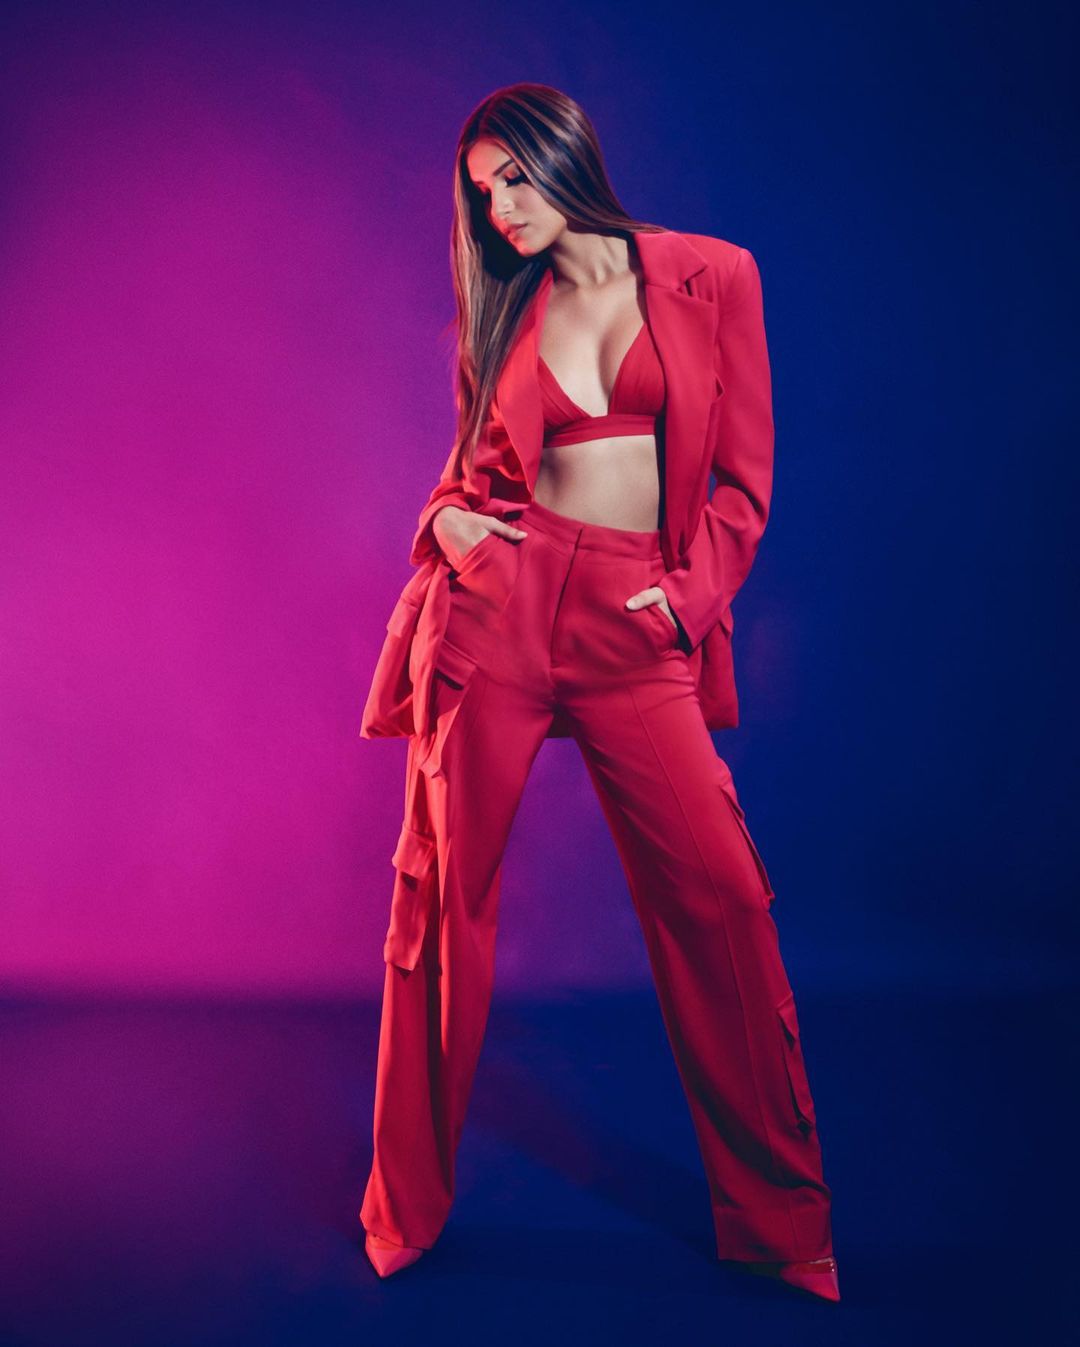 Tara Sutaria looks chic in the red pantsuit.